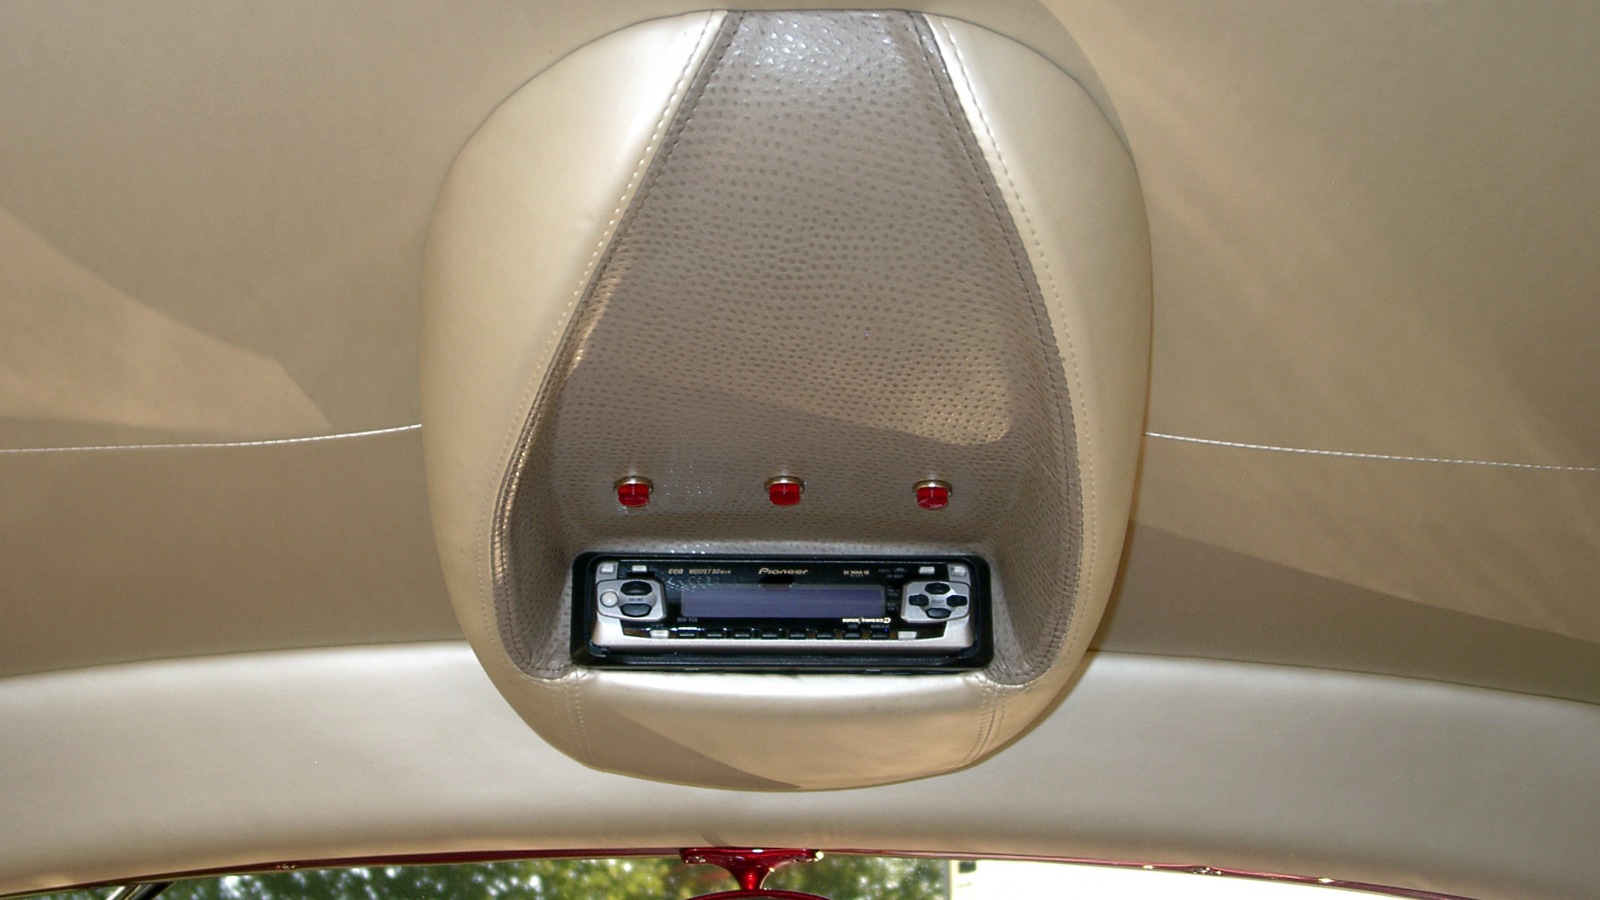 Auto Interior by Mark Denison